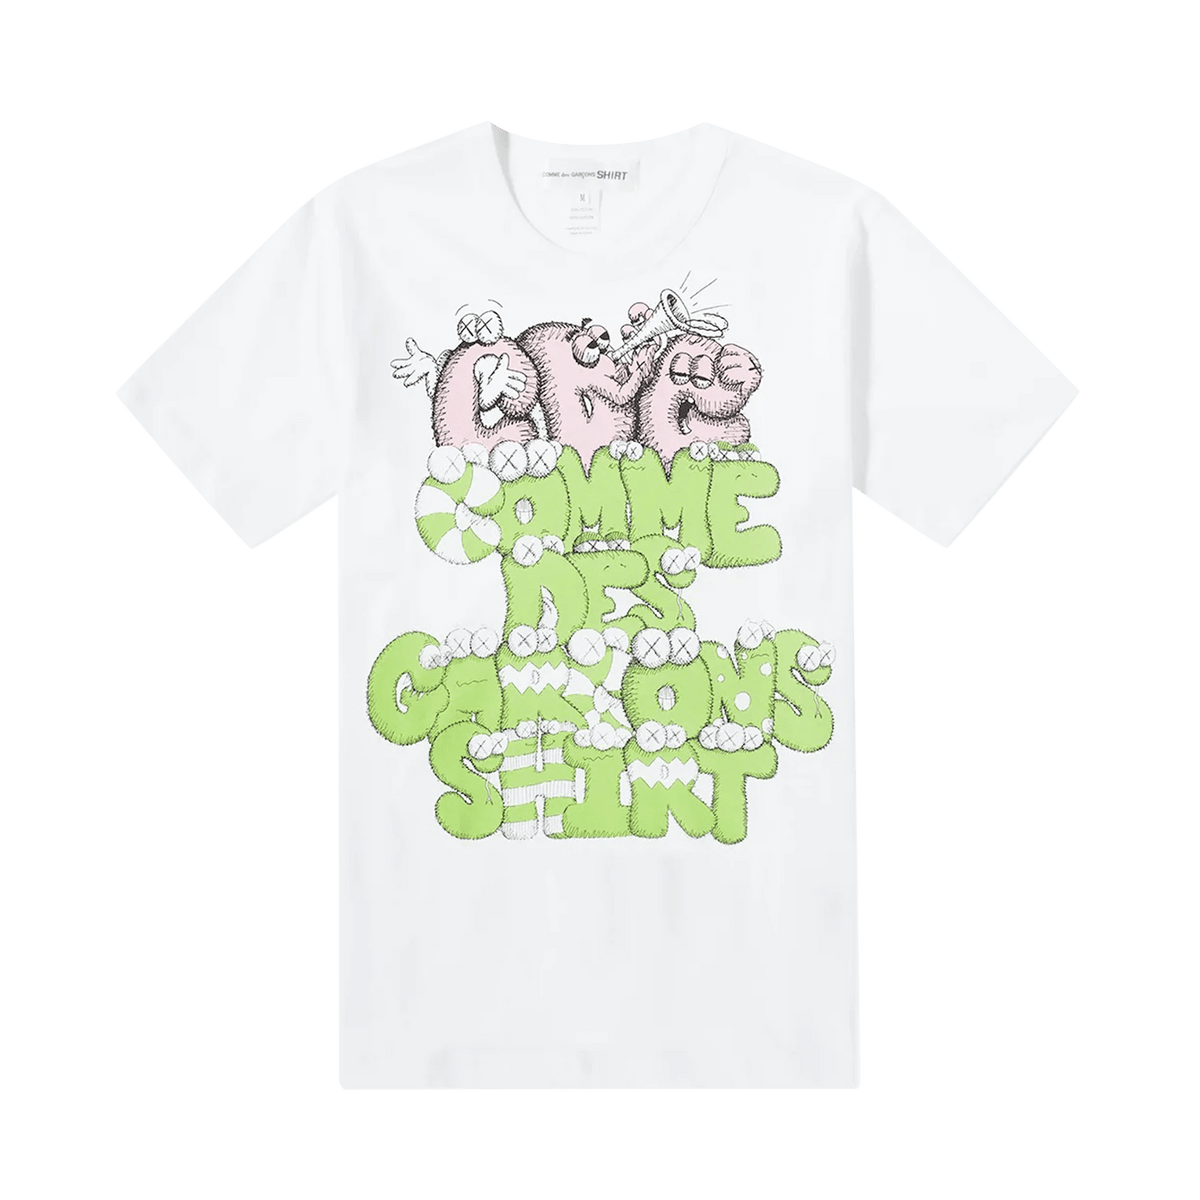 Comme des Garçons SHIRT x KAWS Print T-Shirt 'White' - Kick Game